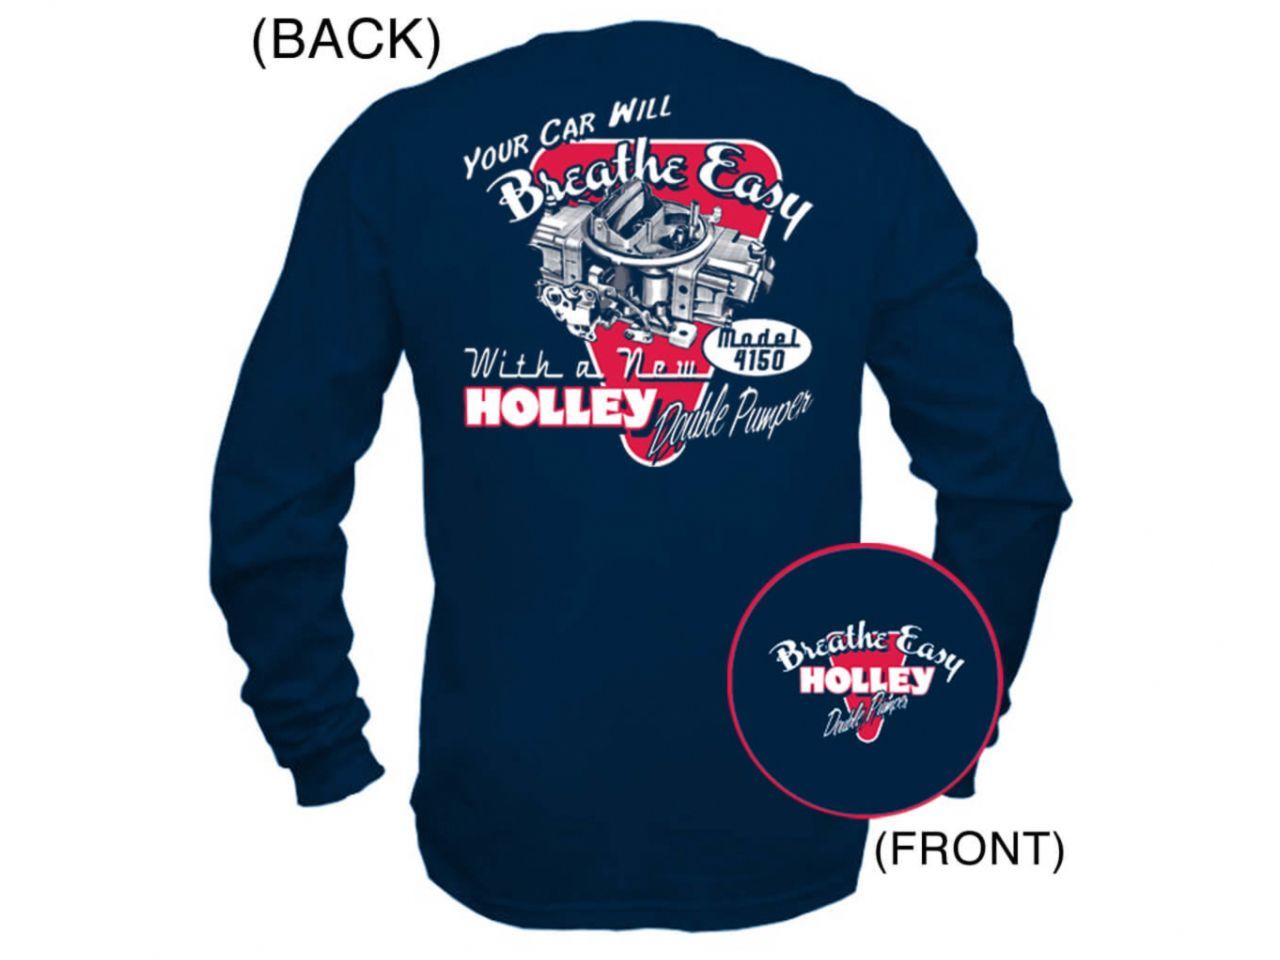 Holley Shirts 10015-XXLHOL Item Image